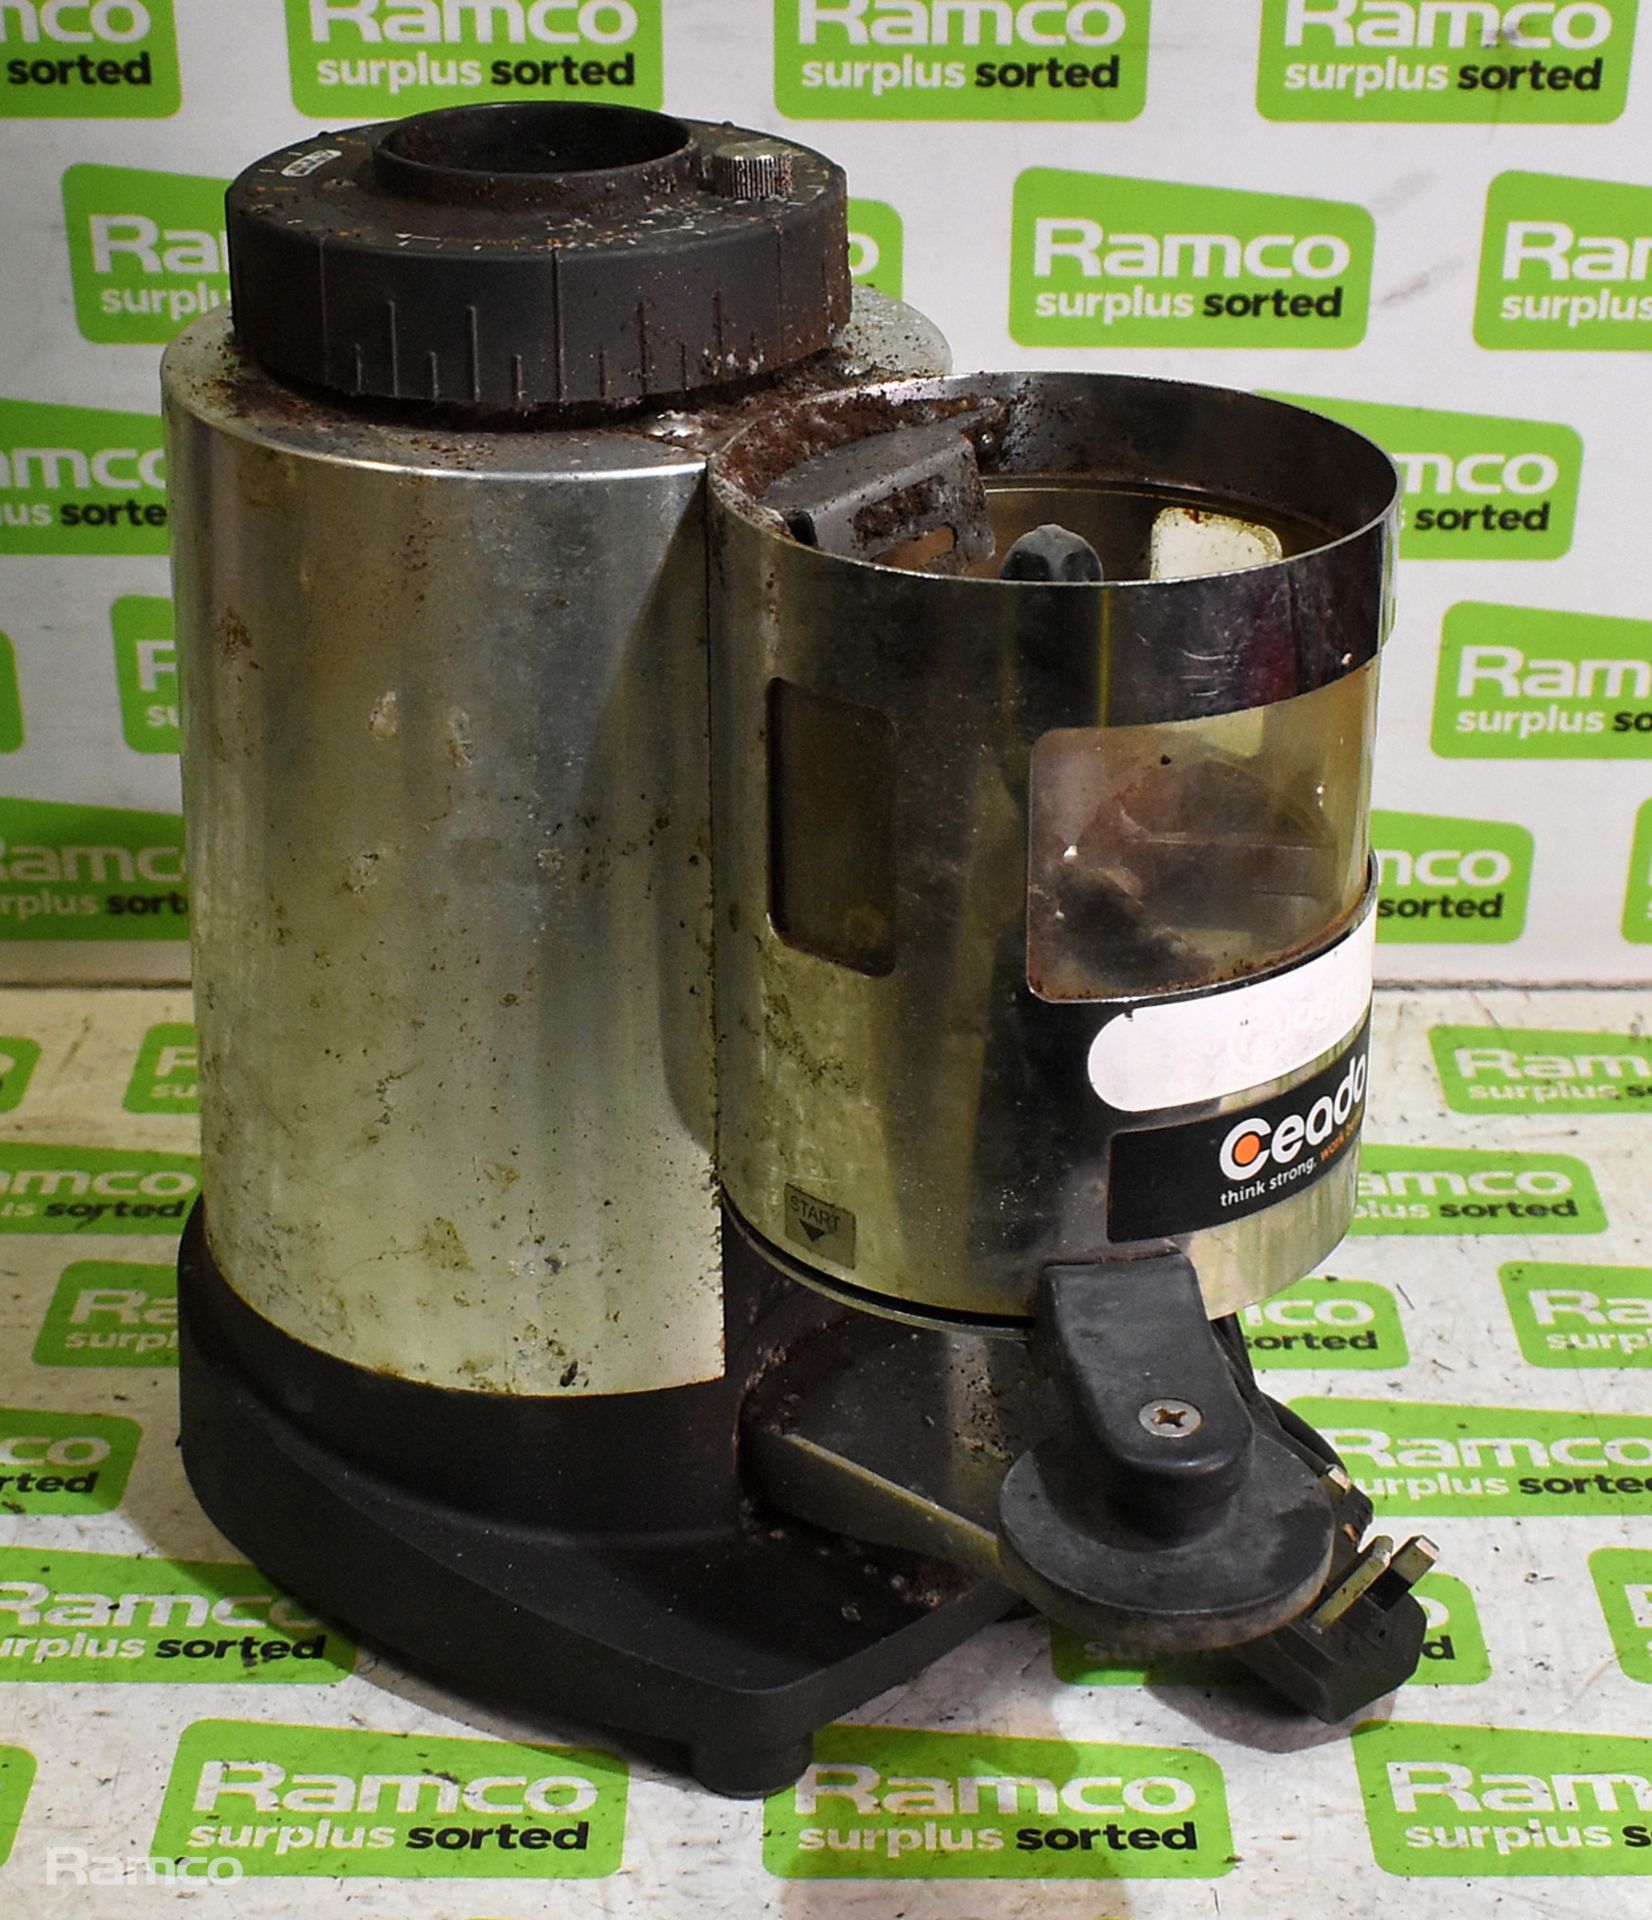 2x Ceado E6X espresso coffee grinder bodies - Image 7 of 10